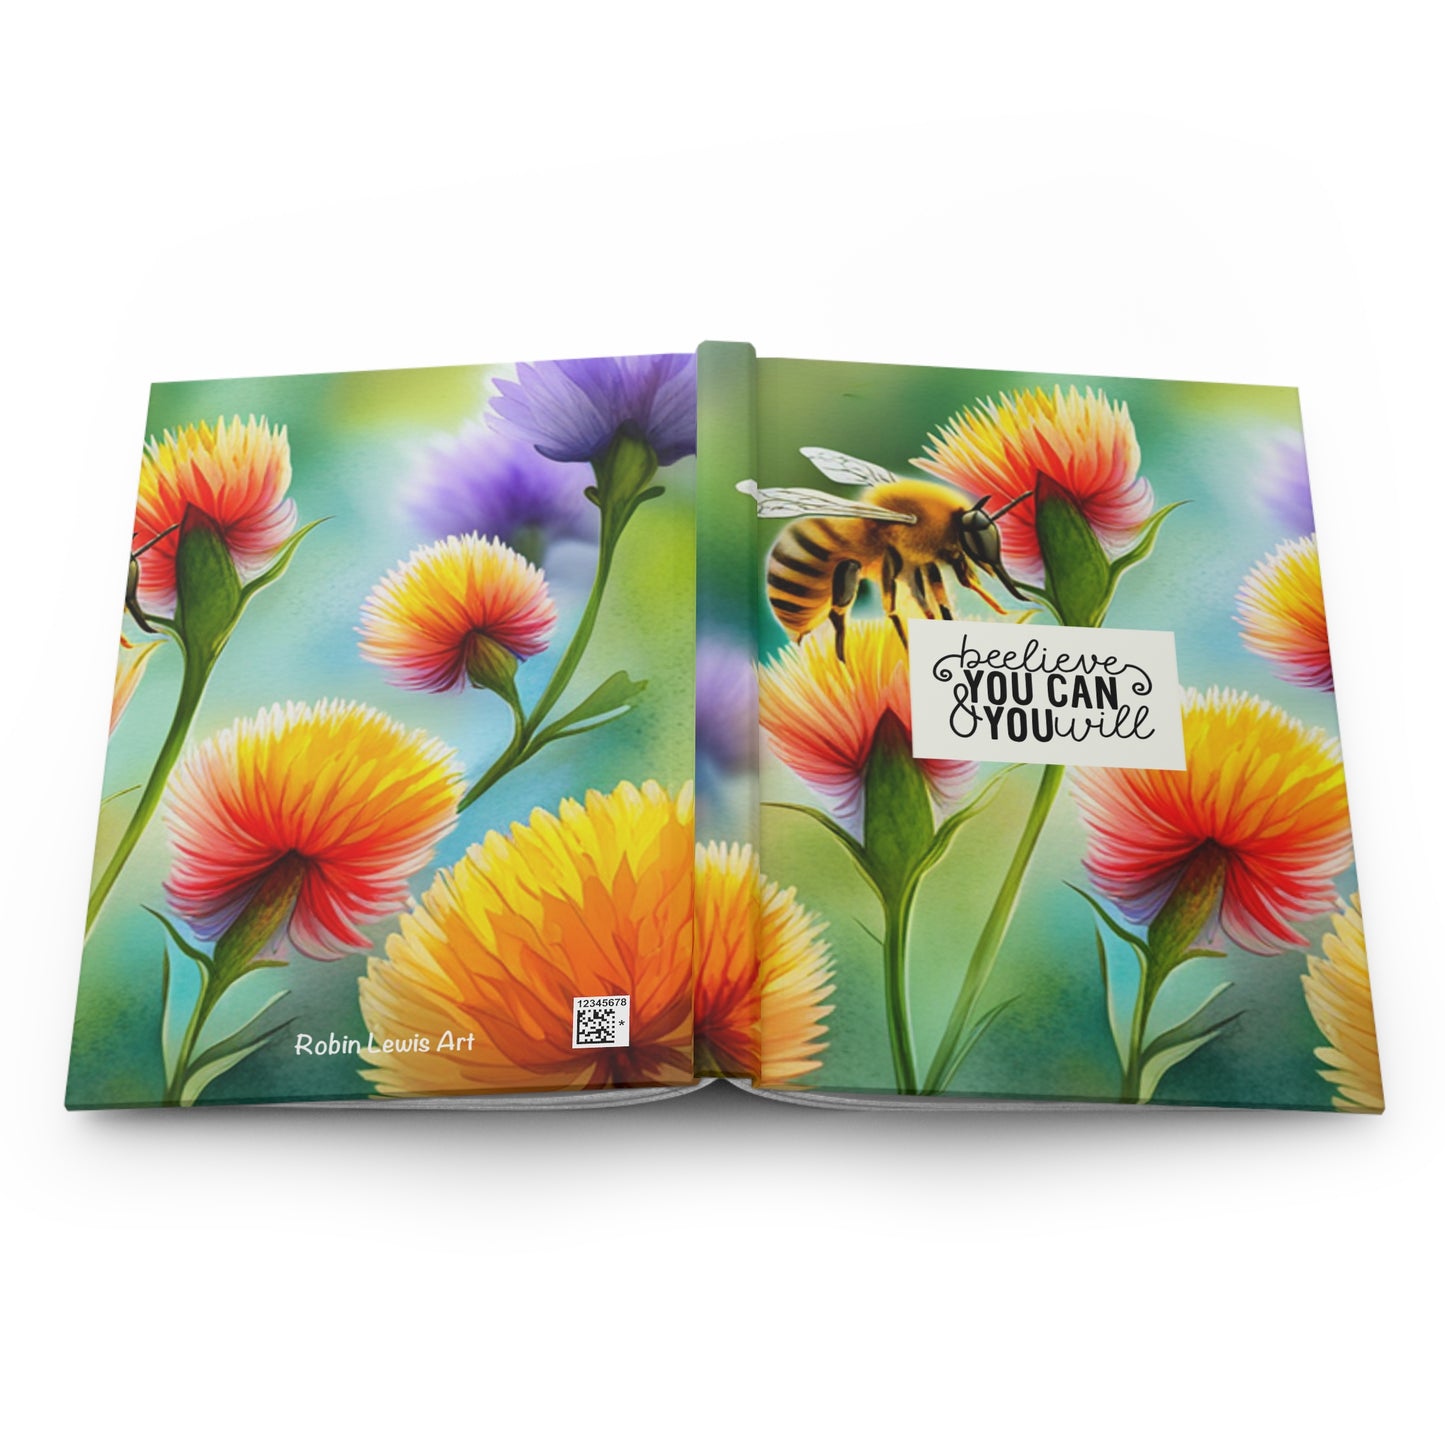 Bee-lieve Hardcover Journal